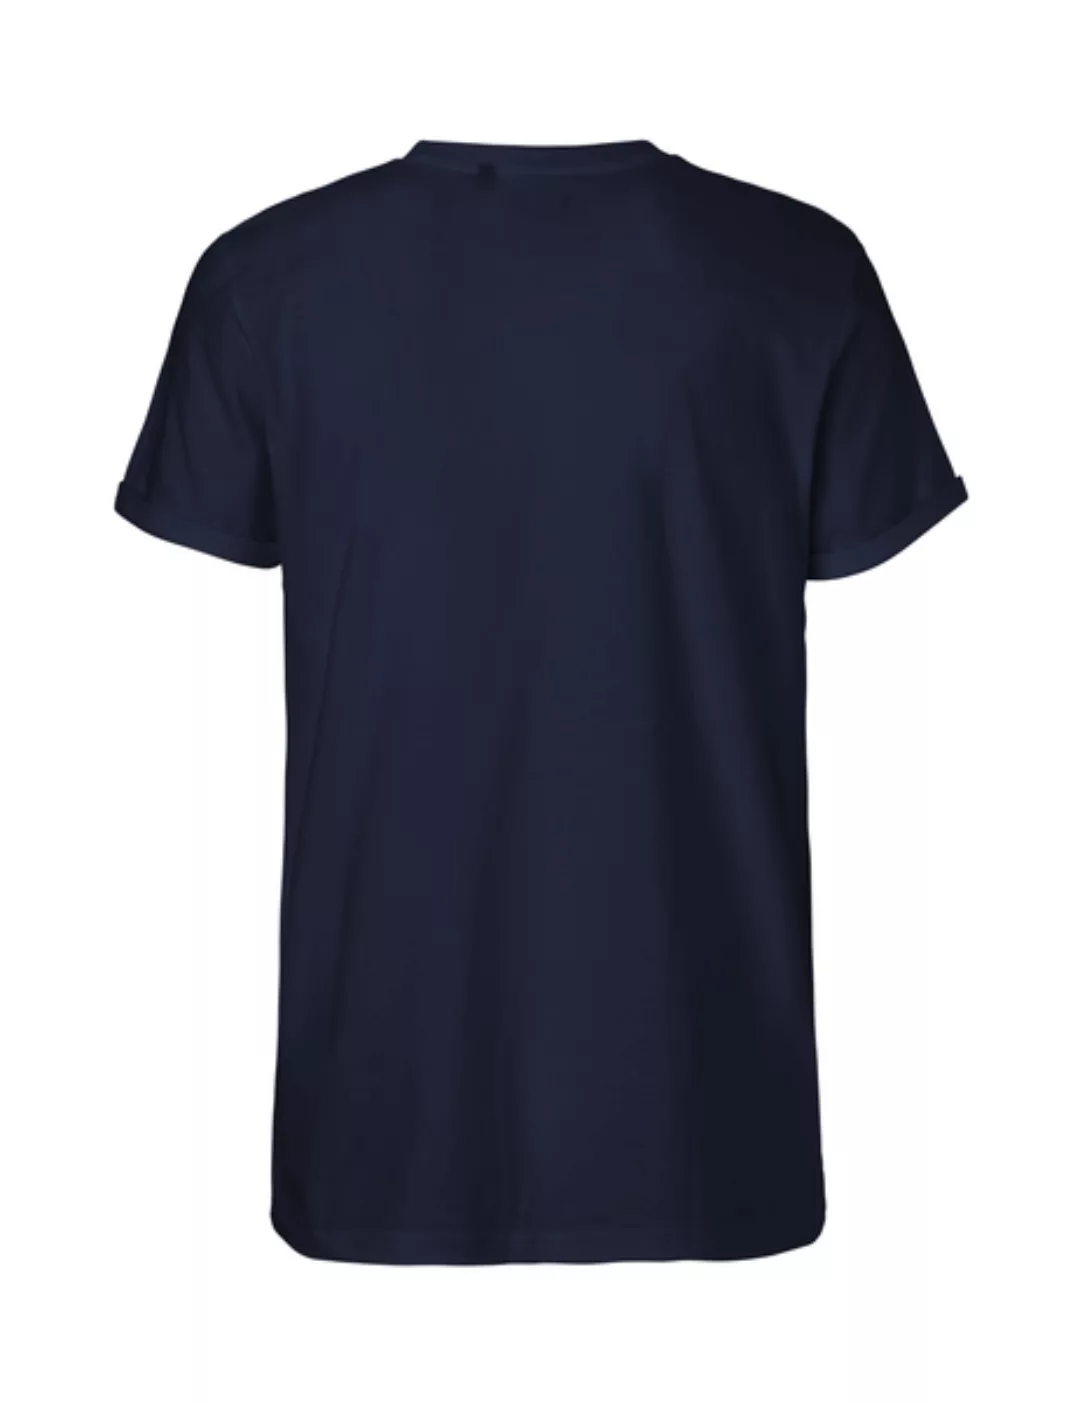 Männer T-shirt Roll-up günstig online kaufen